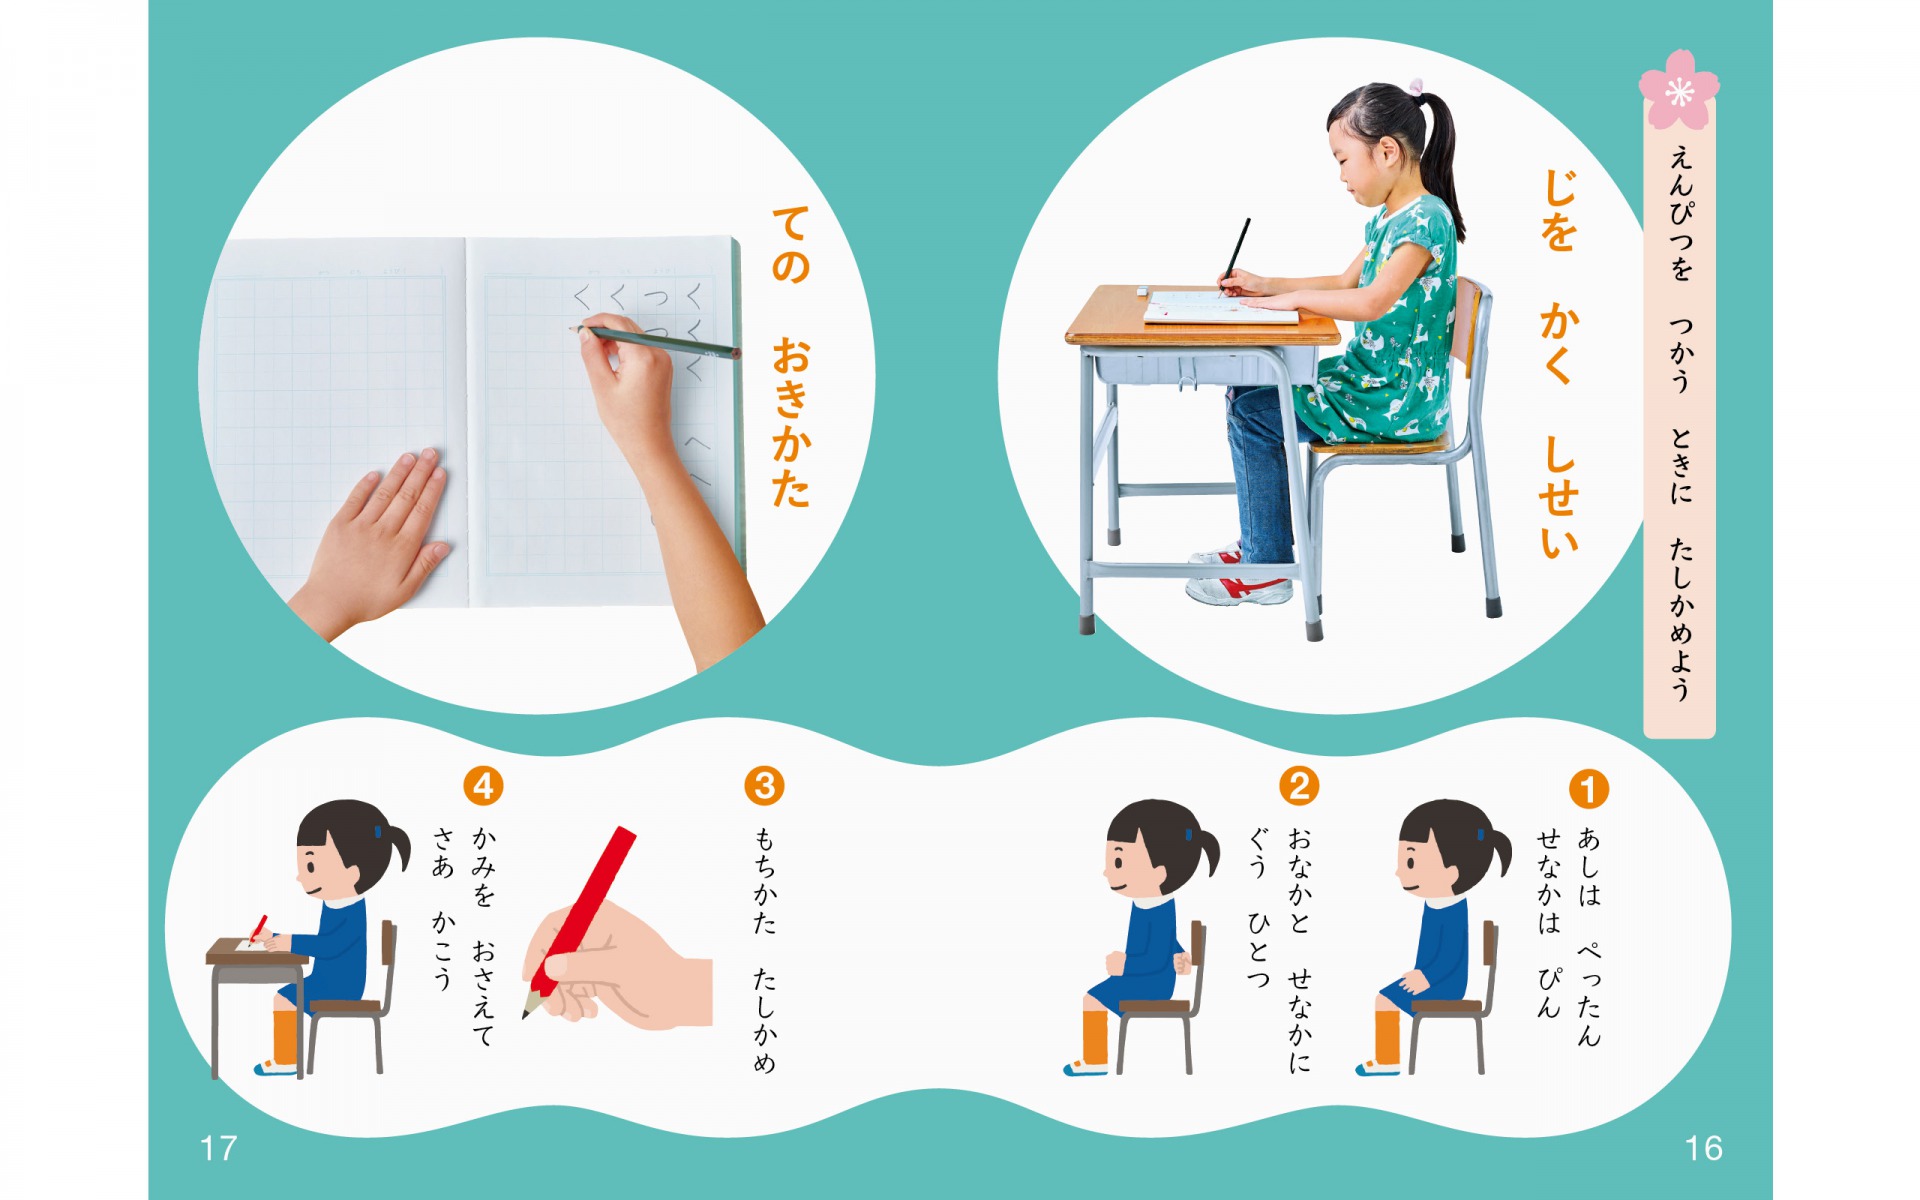  Japanese Language Arts Textbooks